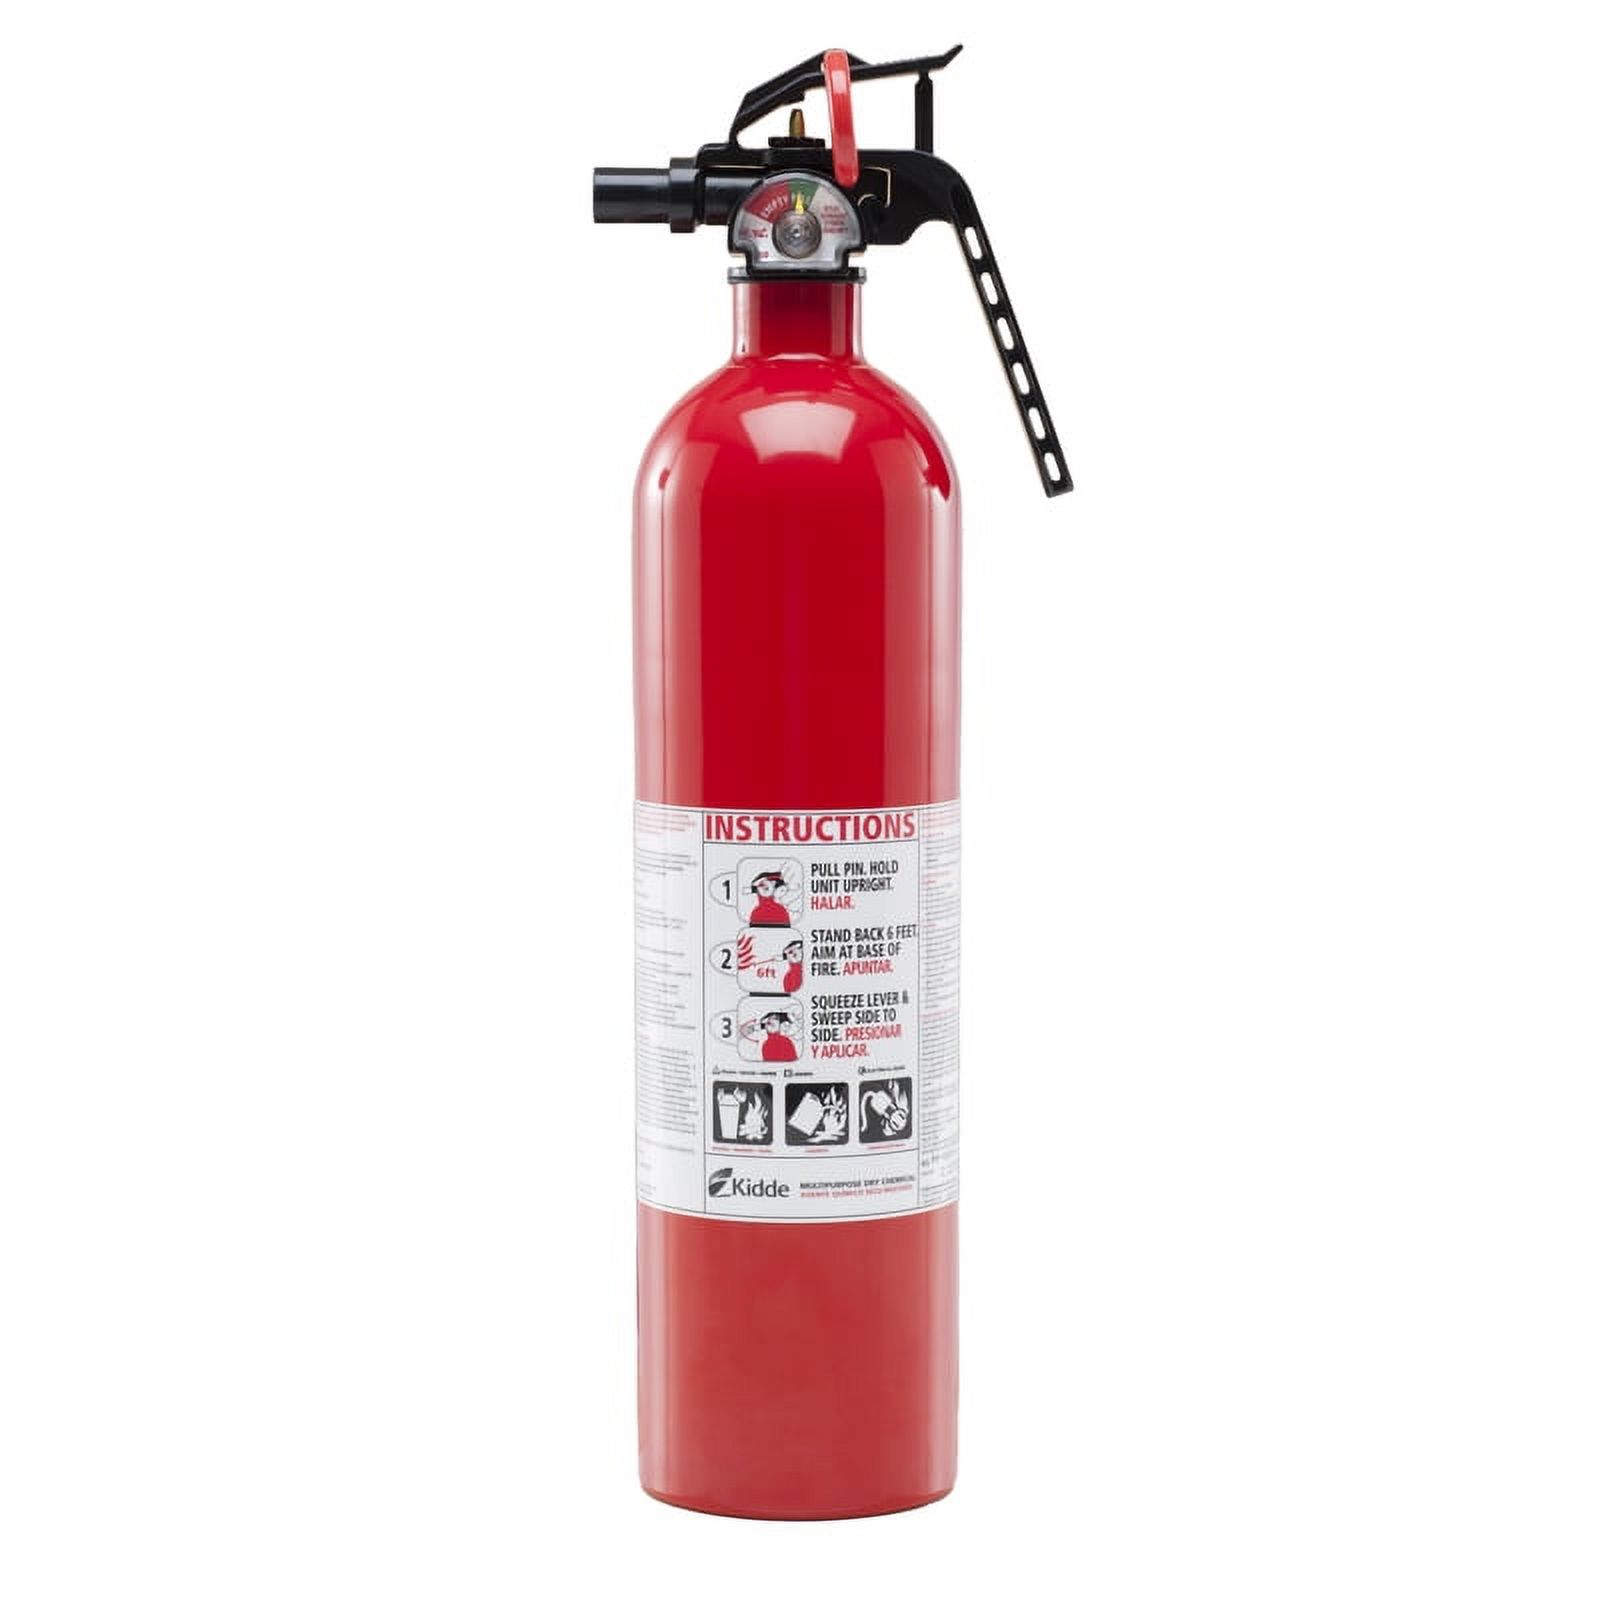 Kidde 1-A 10 B:C Full Home Fire Extinguisher, 2.5 Lb, 14-7/16" x 4-5/8" - image 1 of 2